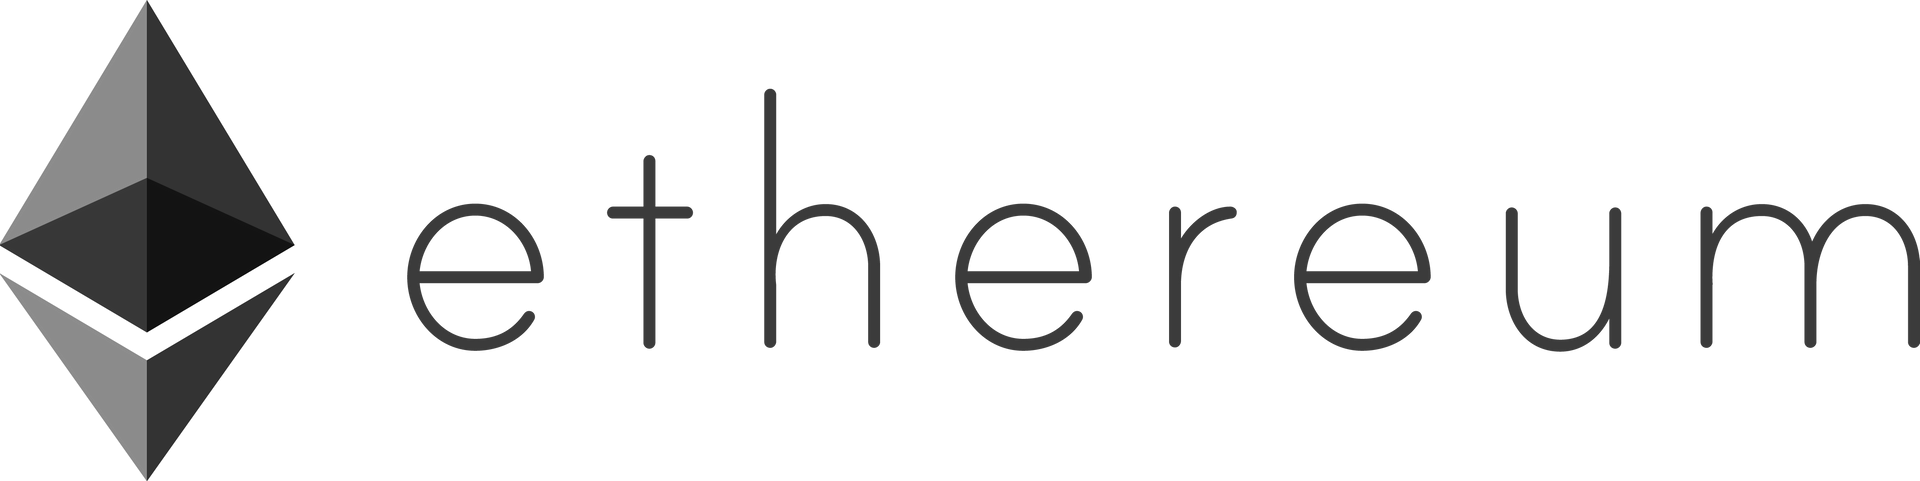 Пейзаж с логотипом ETH (серый)